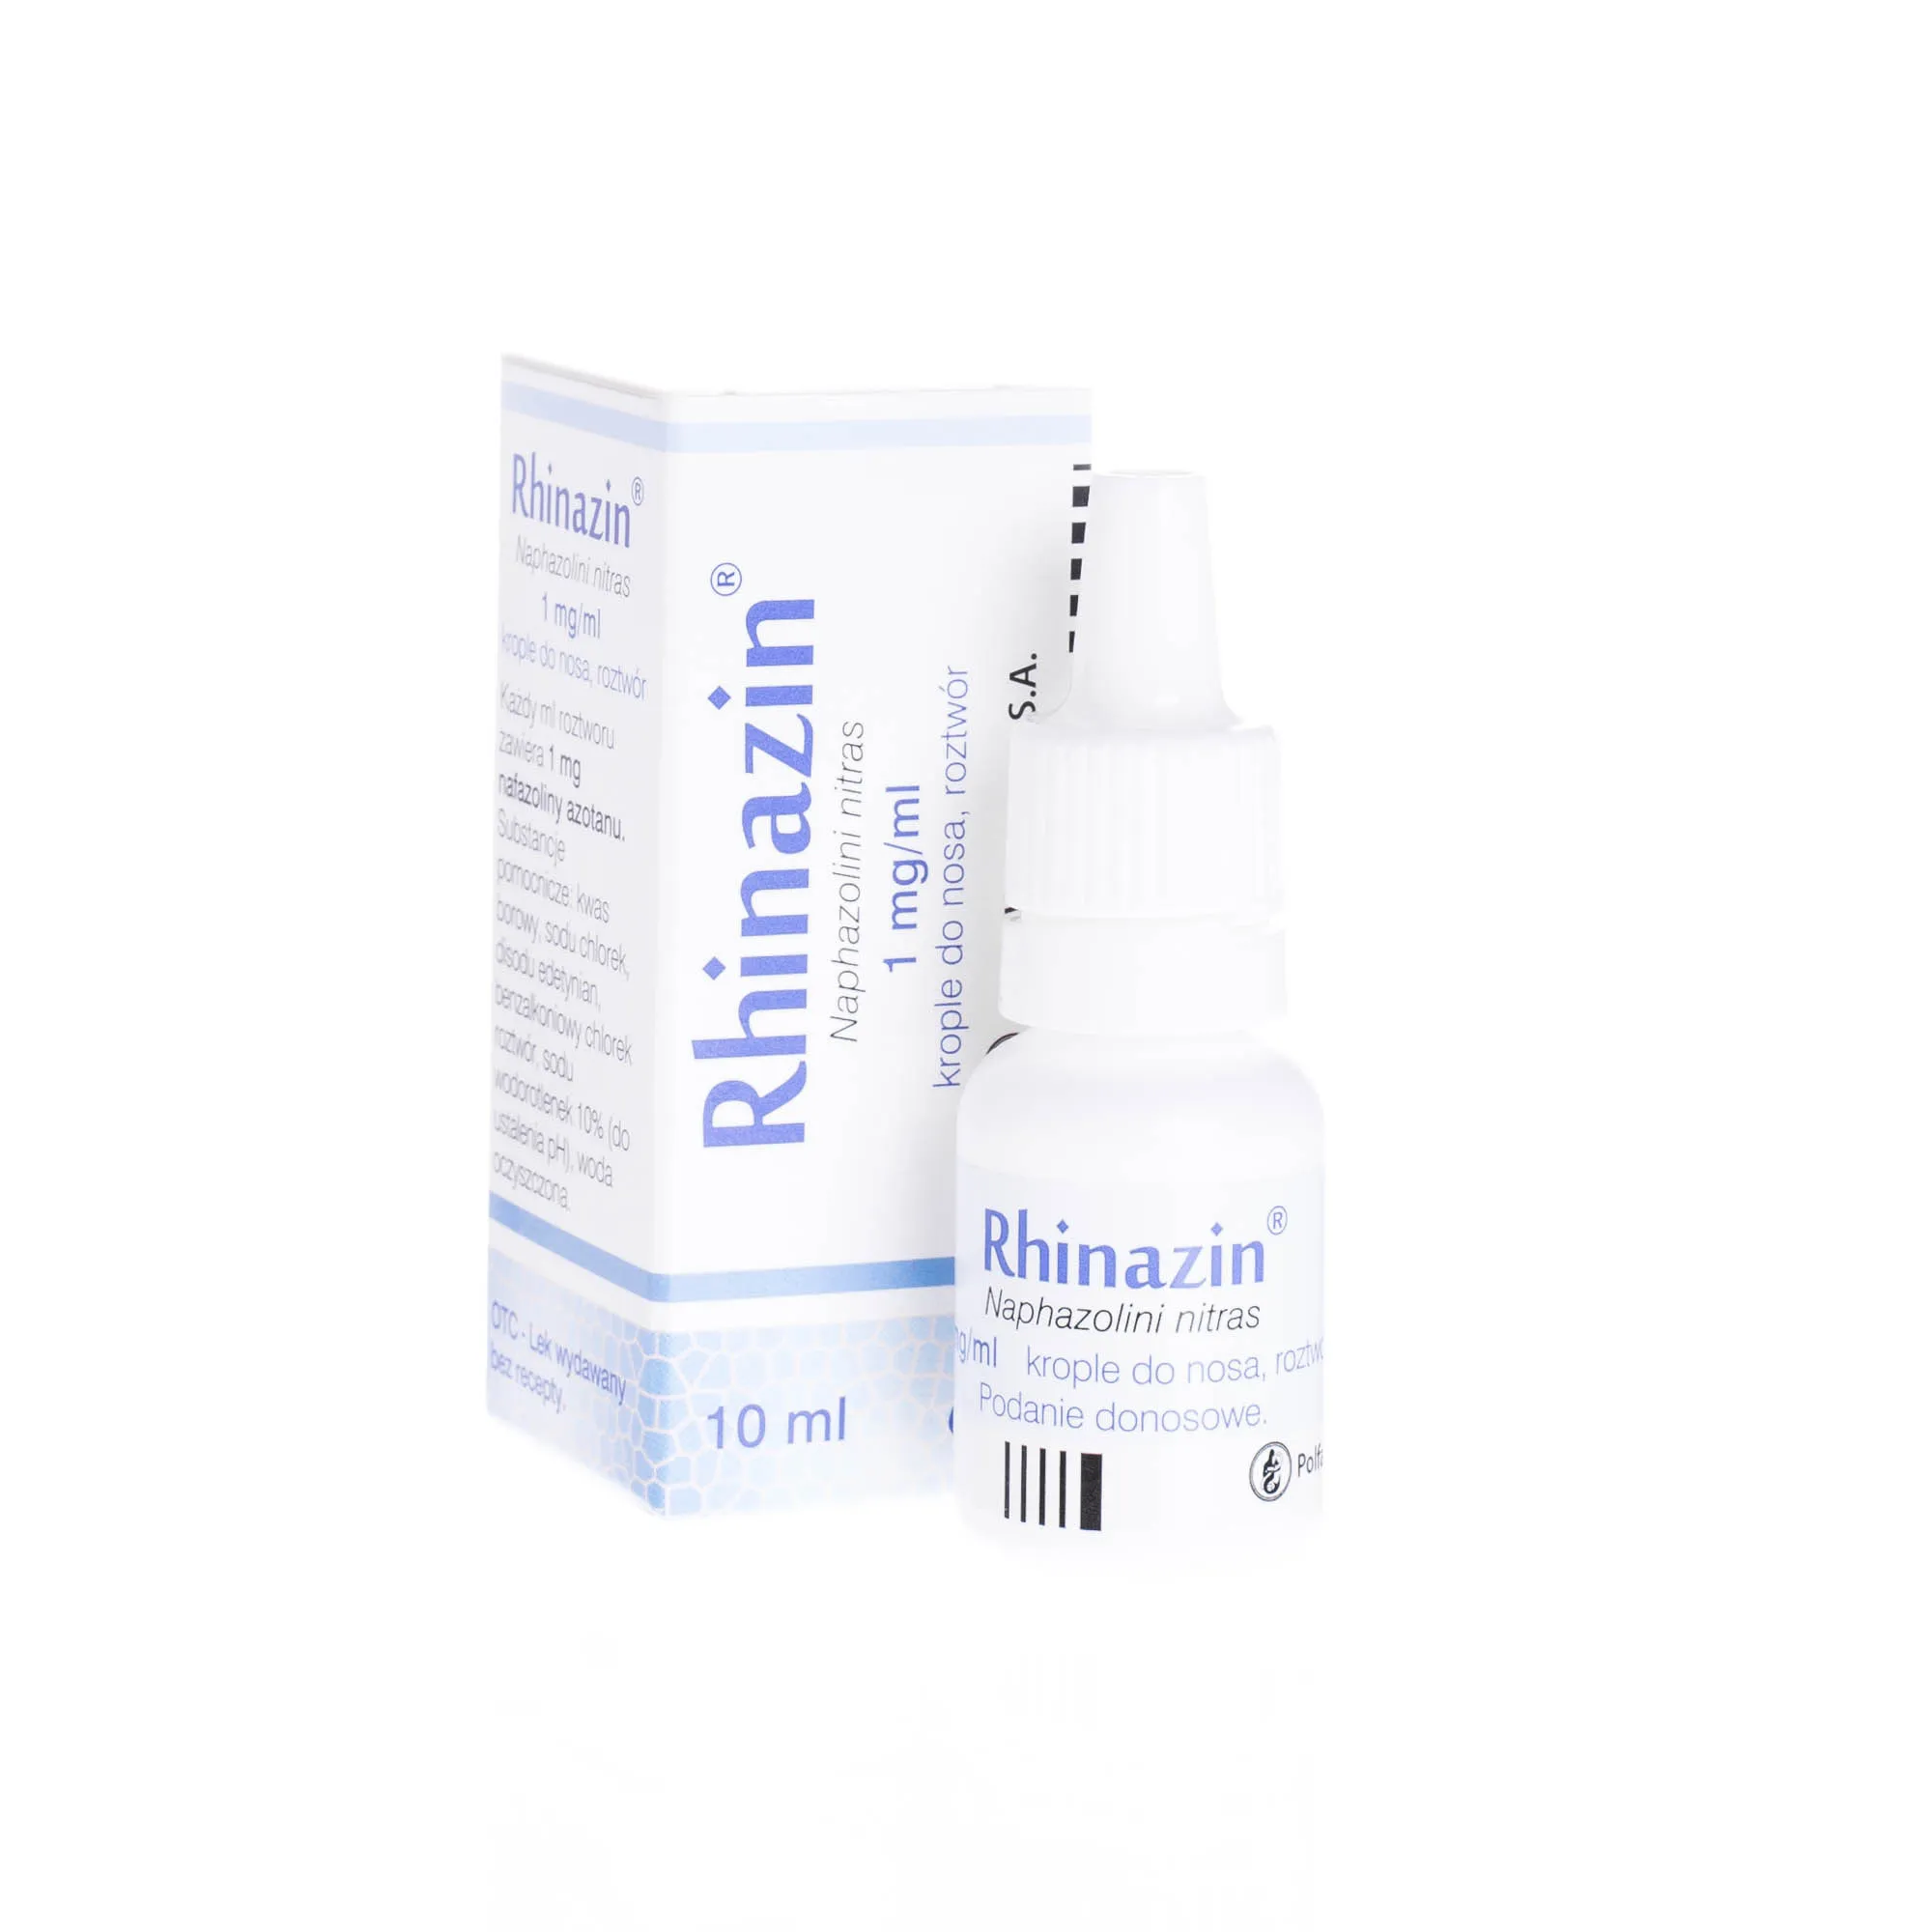 Rhinazin 1 mg/ml, krople do nosa, roztwór, 10 ml 